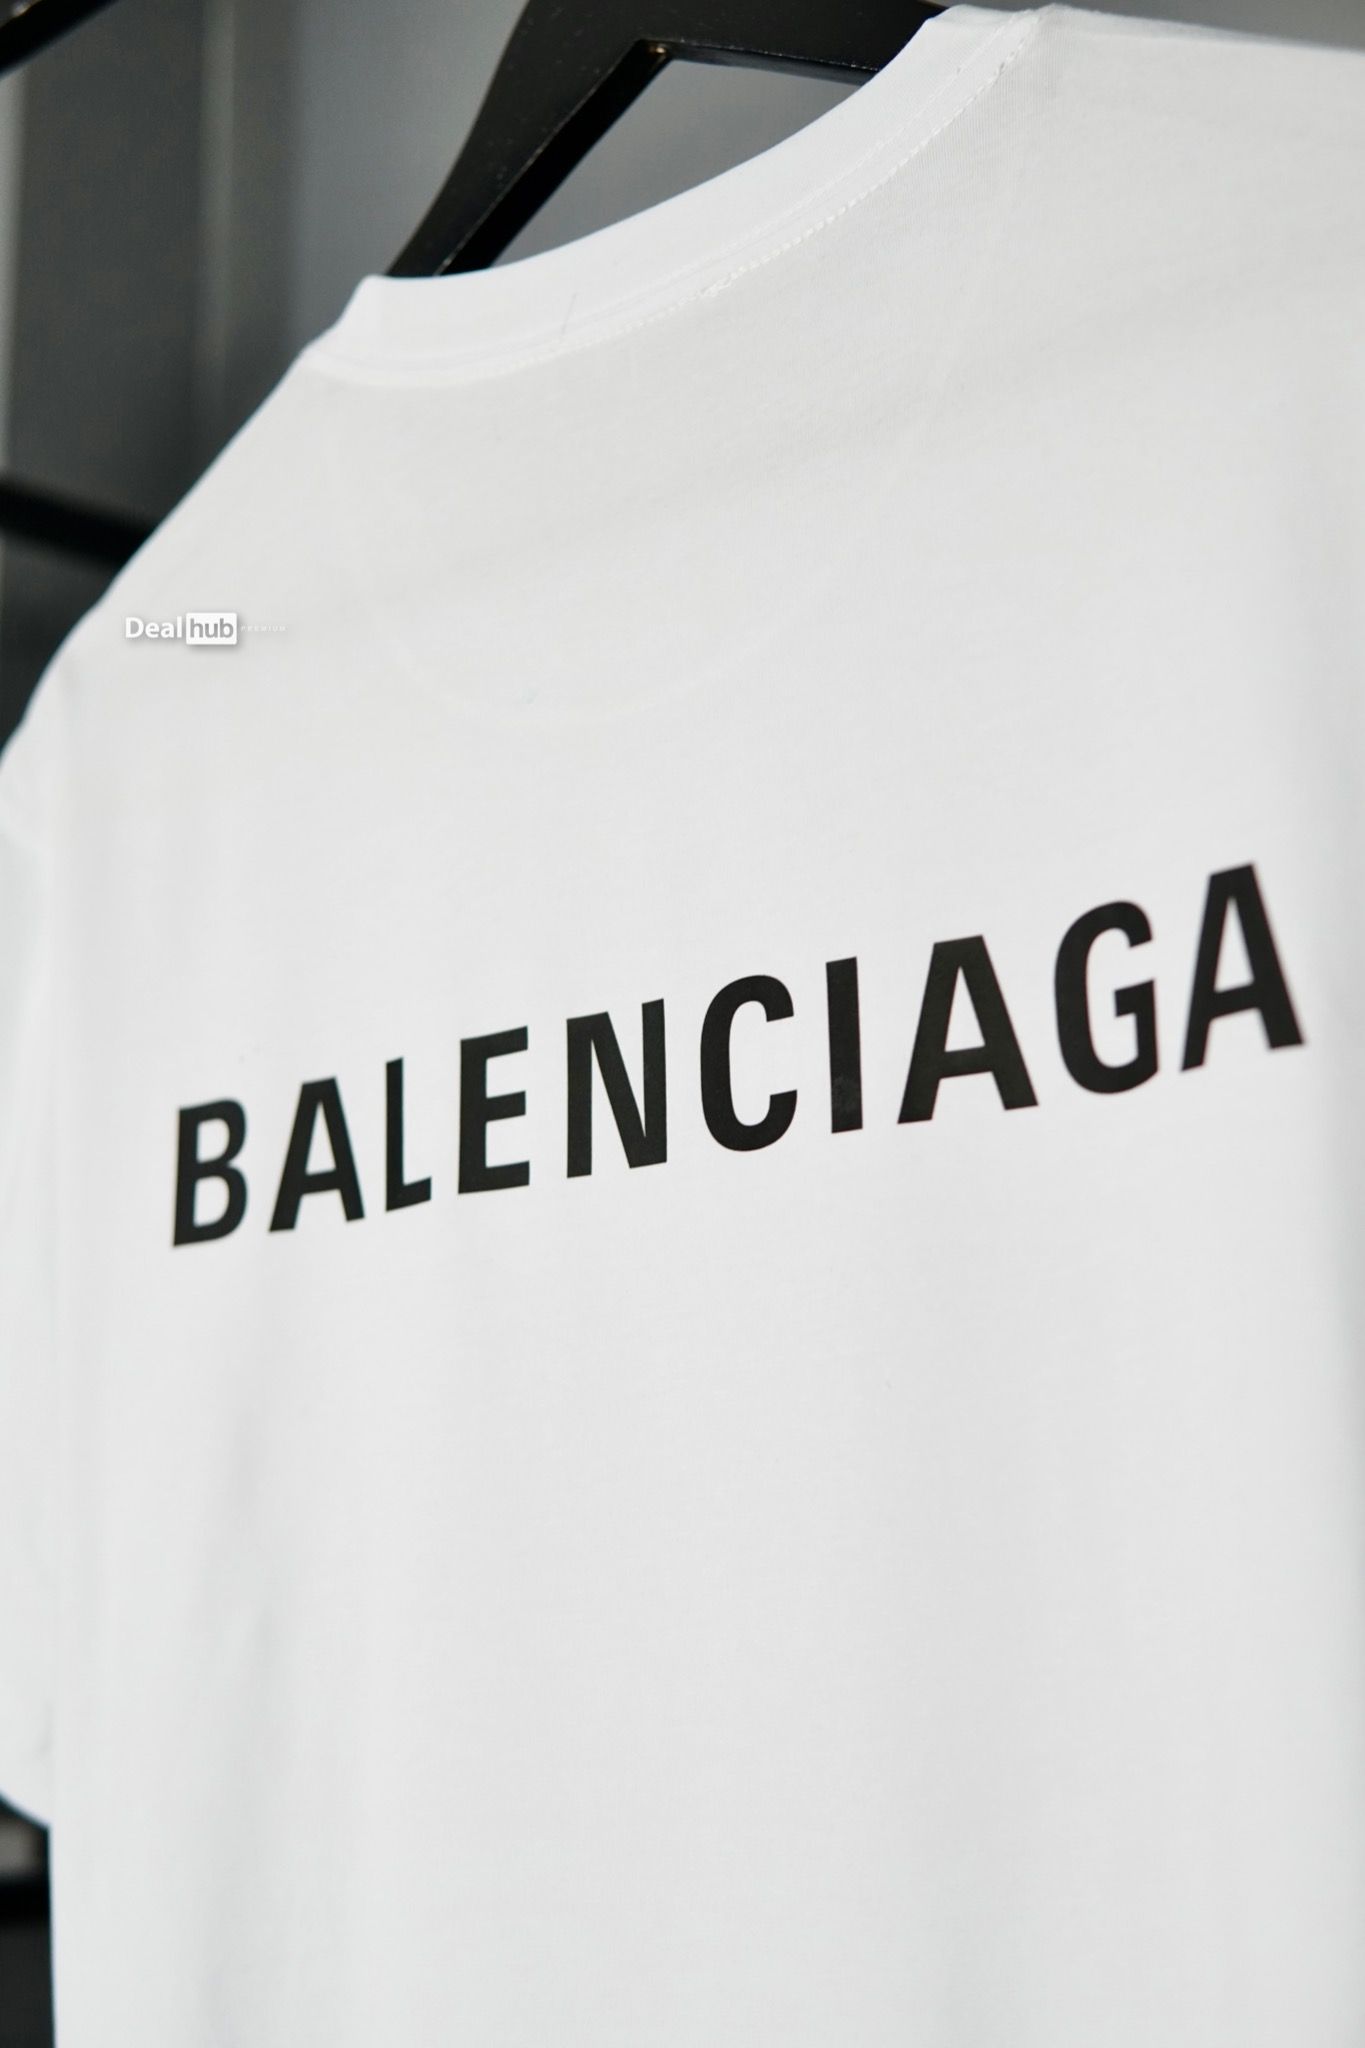 BalenciagaBALENCIAGA Logoprint leather tote bag  WEAR